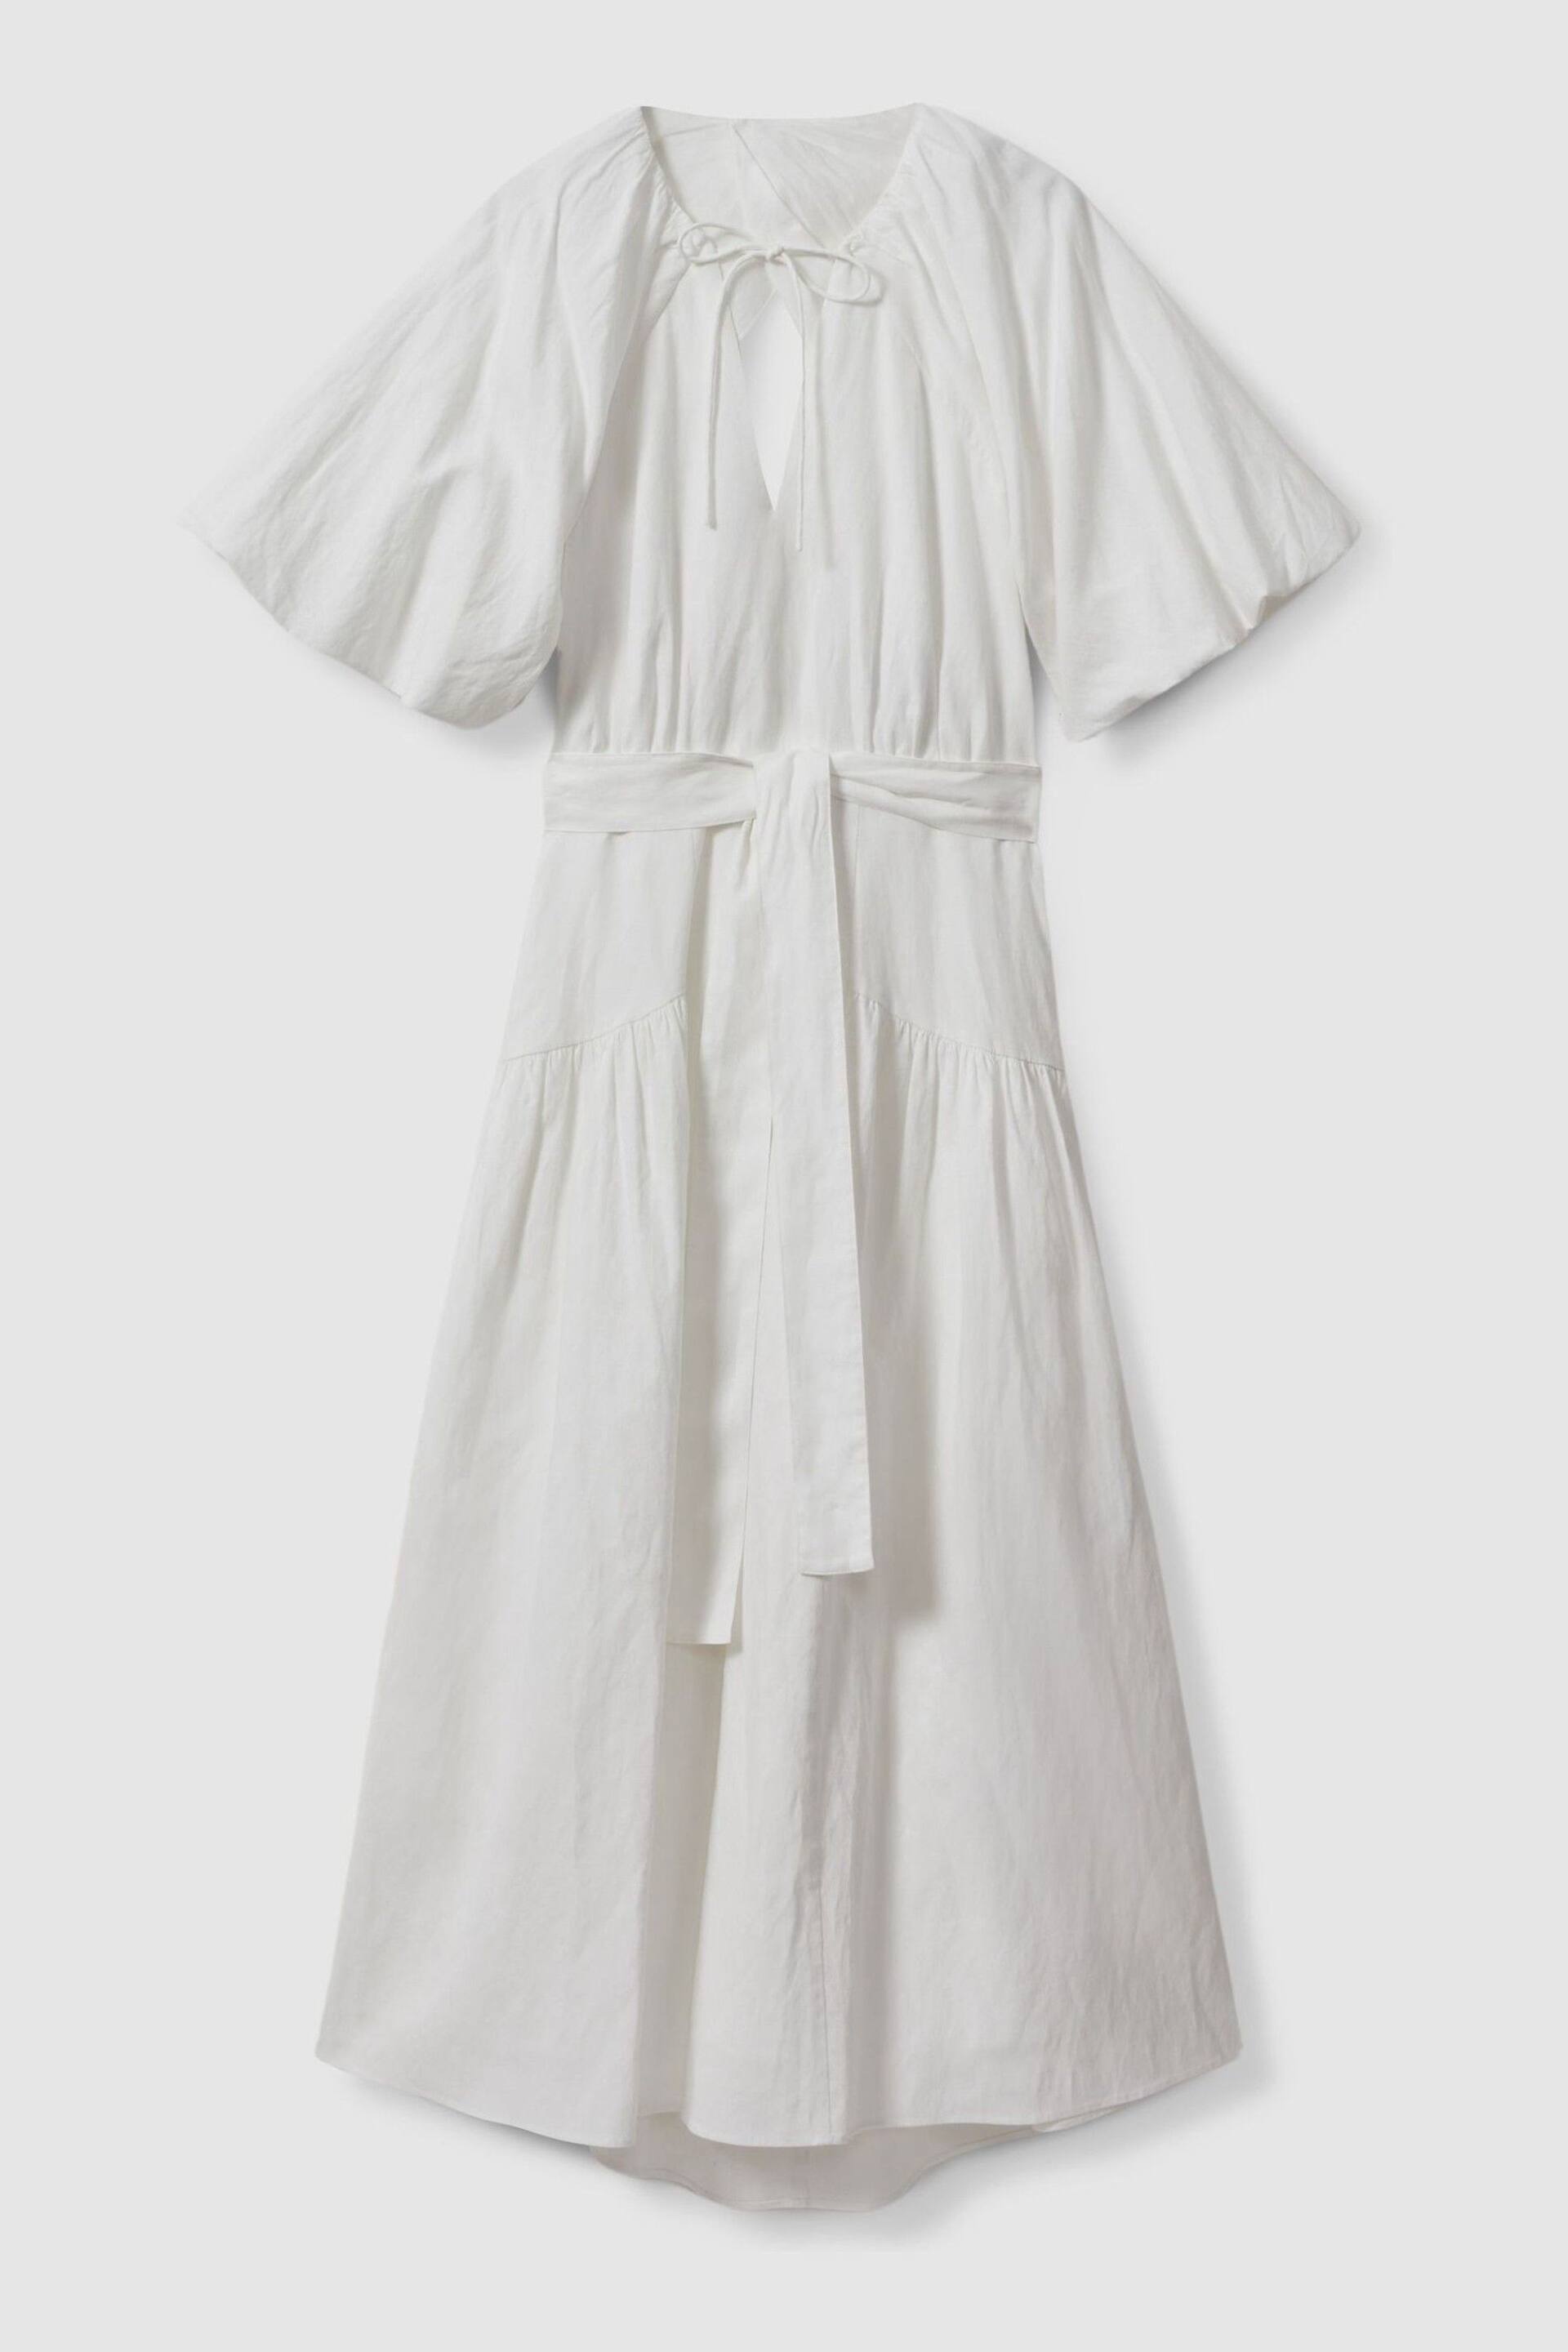 Reiss White Alice Lyocell Blend Puff Sleeve Midi Dress - Image 2 of 5